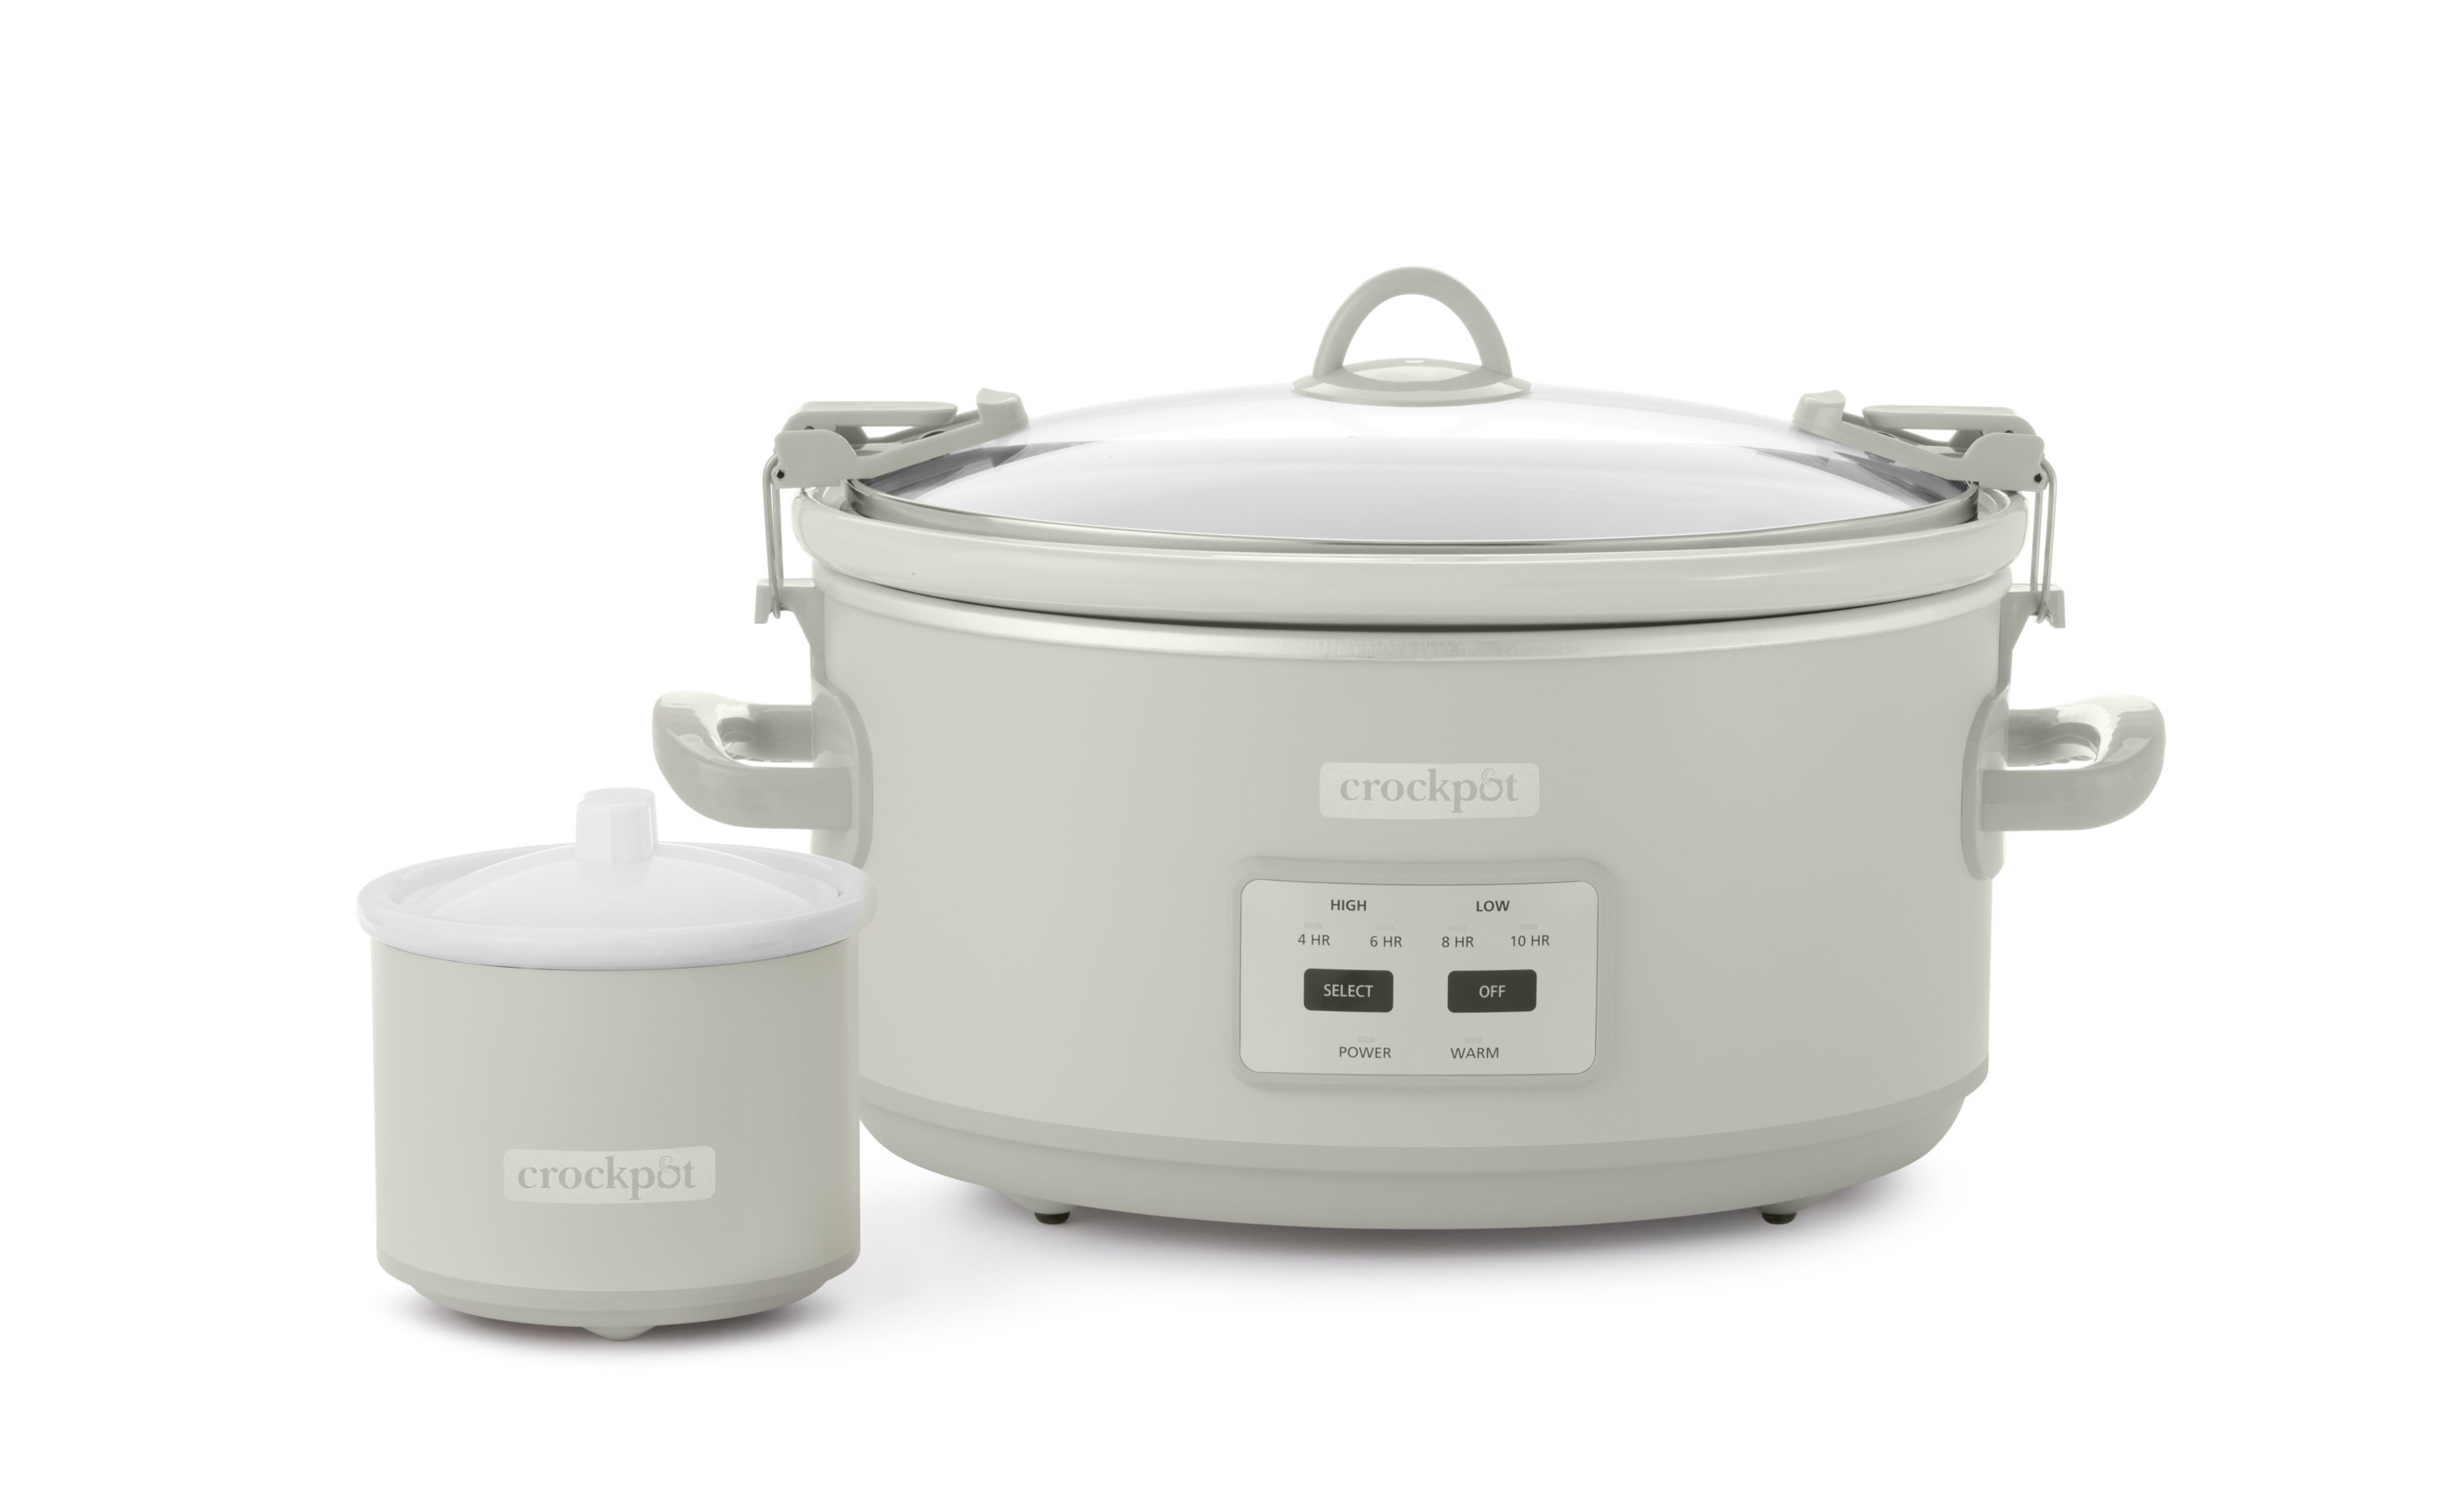 Crock-pot Crockpot 7-Quart Programmable Slow Cooker with Locking